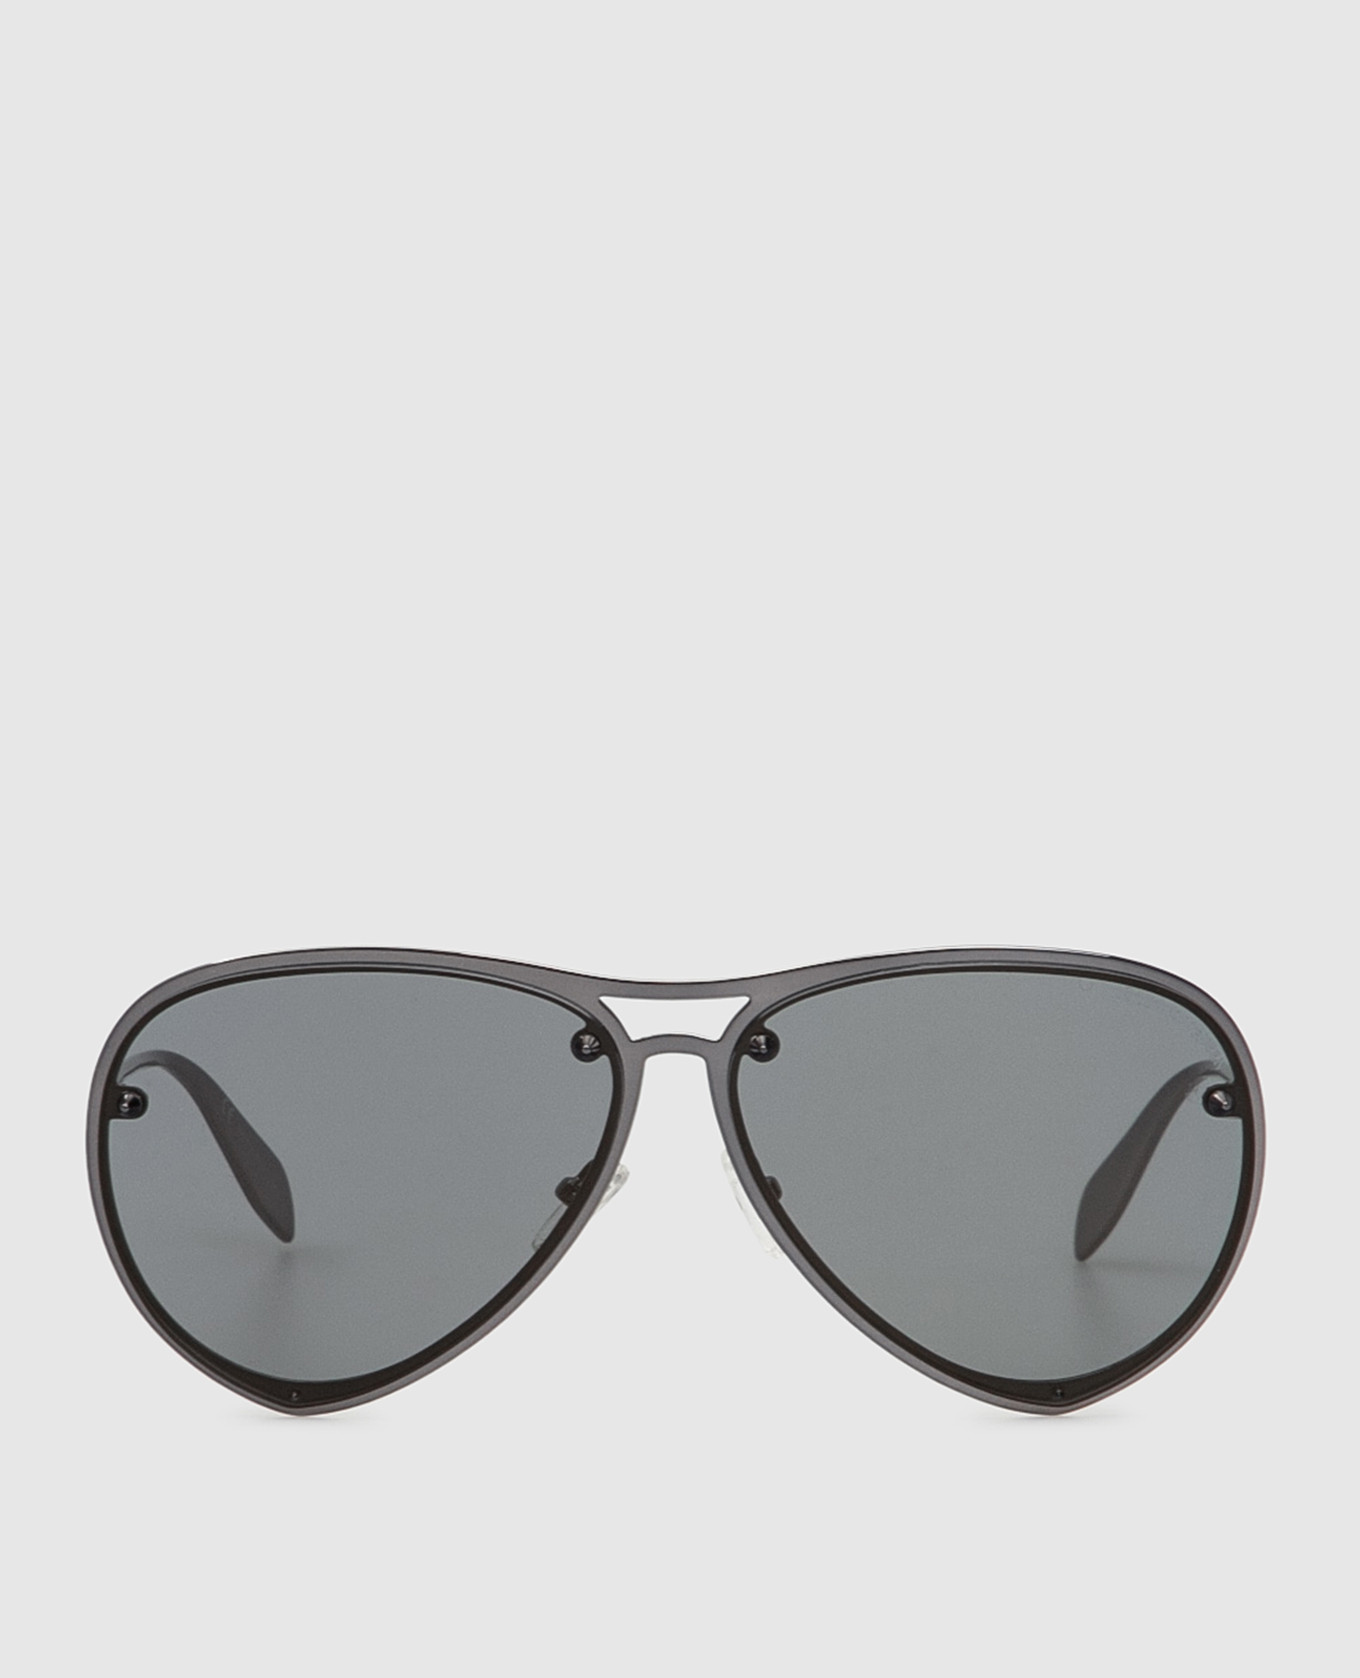 Aviator sunglasses with blue lenses